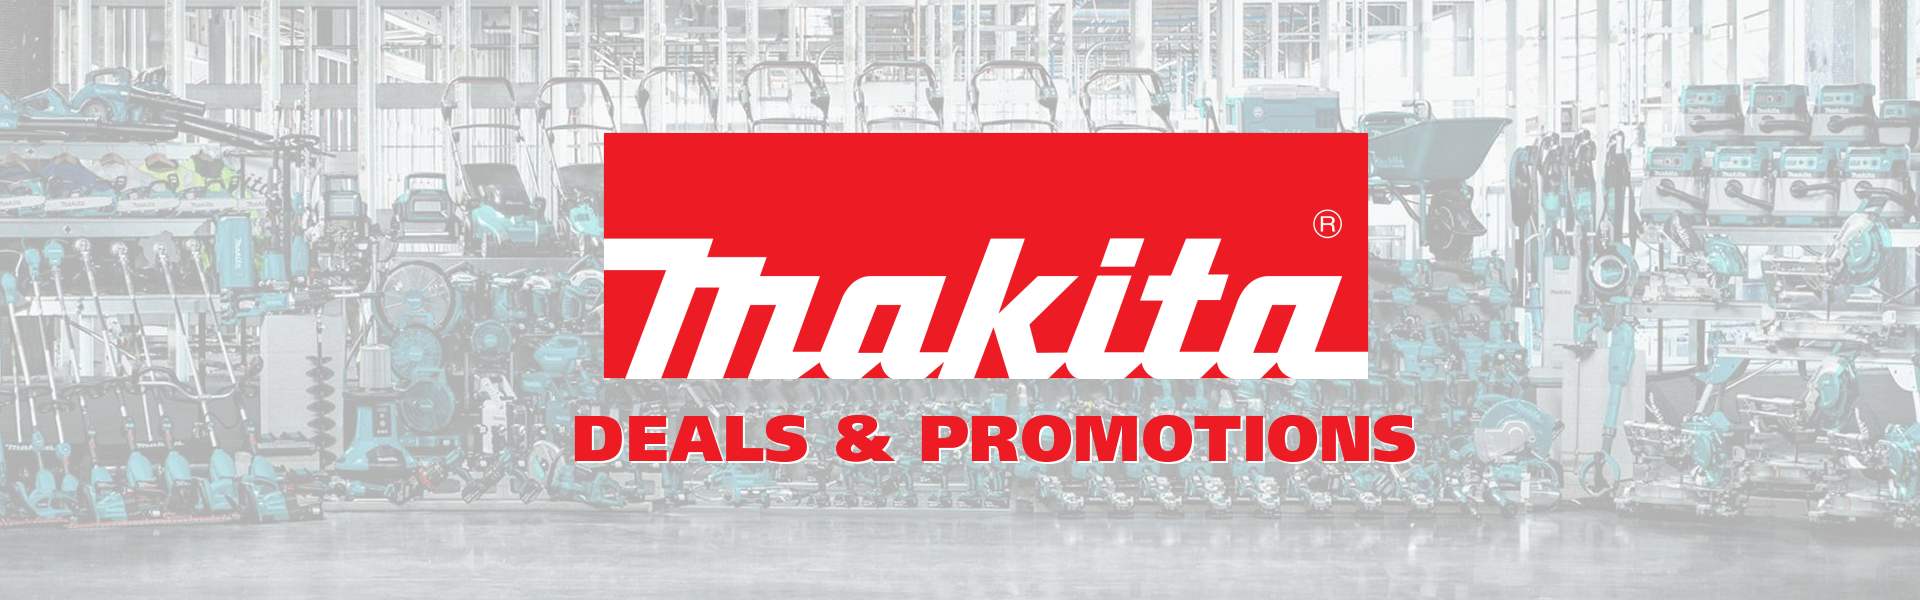 Makita in Qatar Deals & Promotions